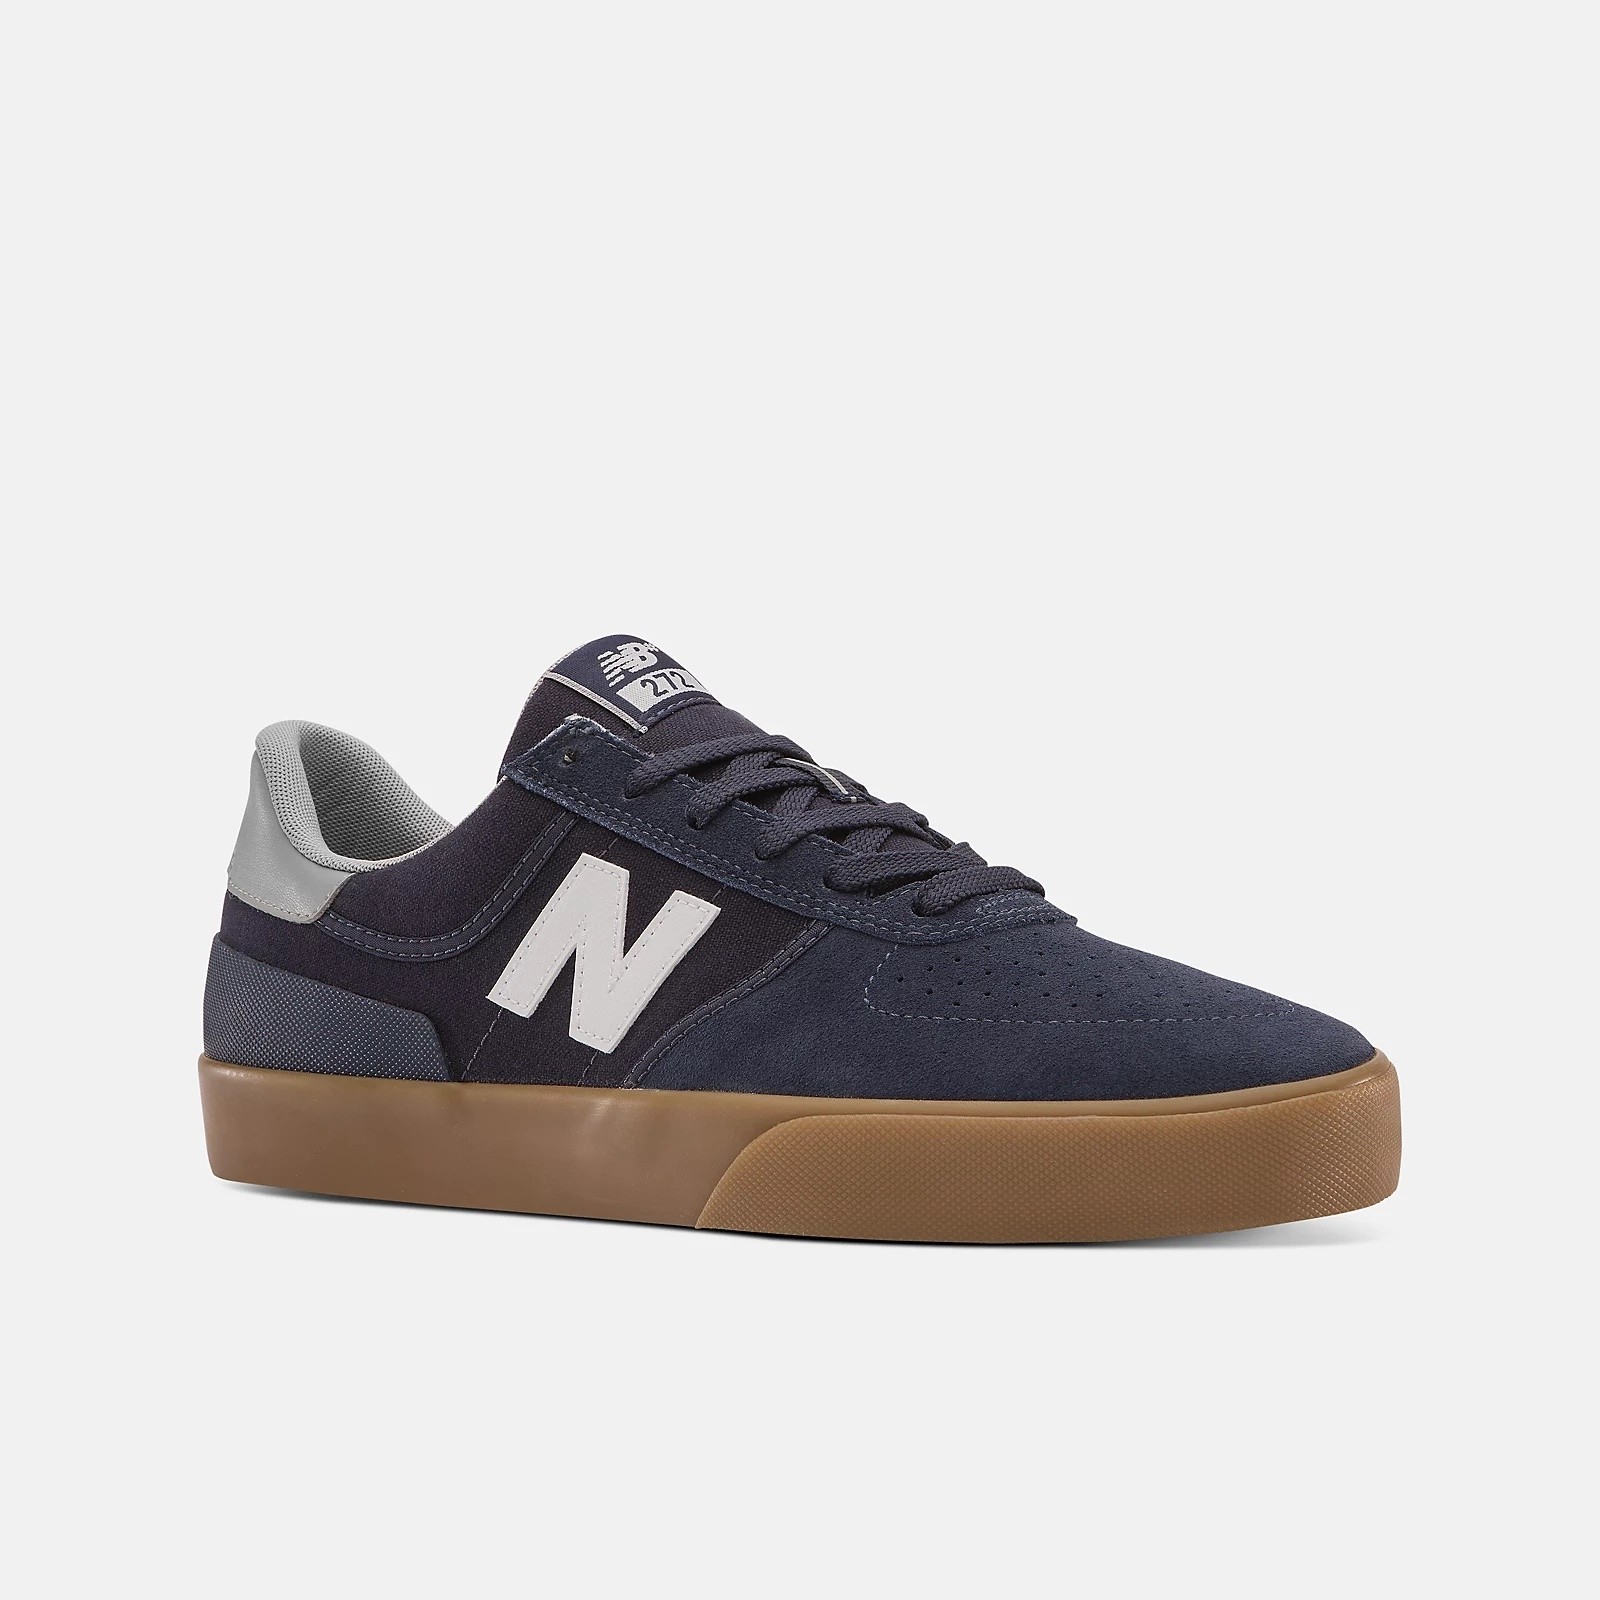 NB Numeric Skate Shoes - New Balance